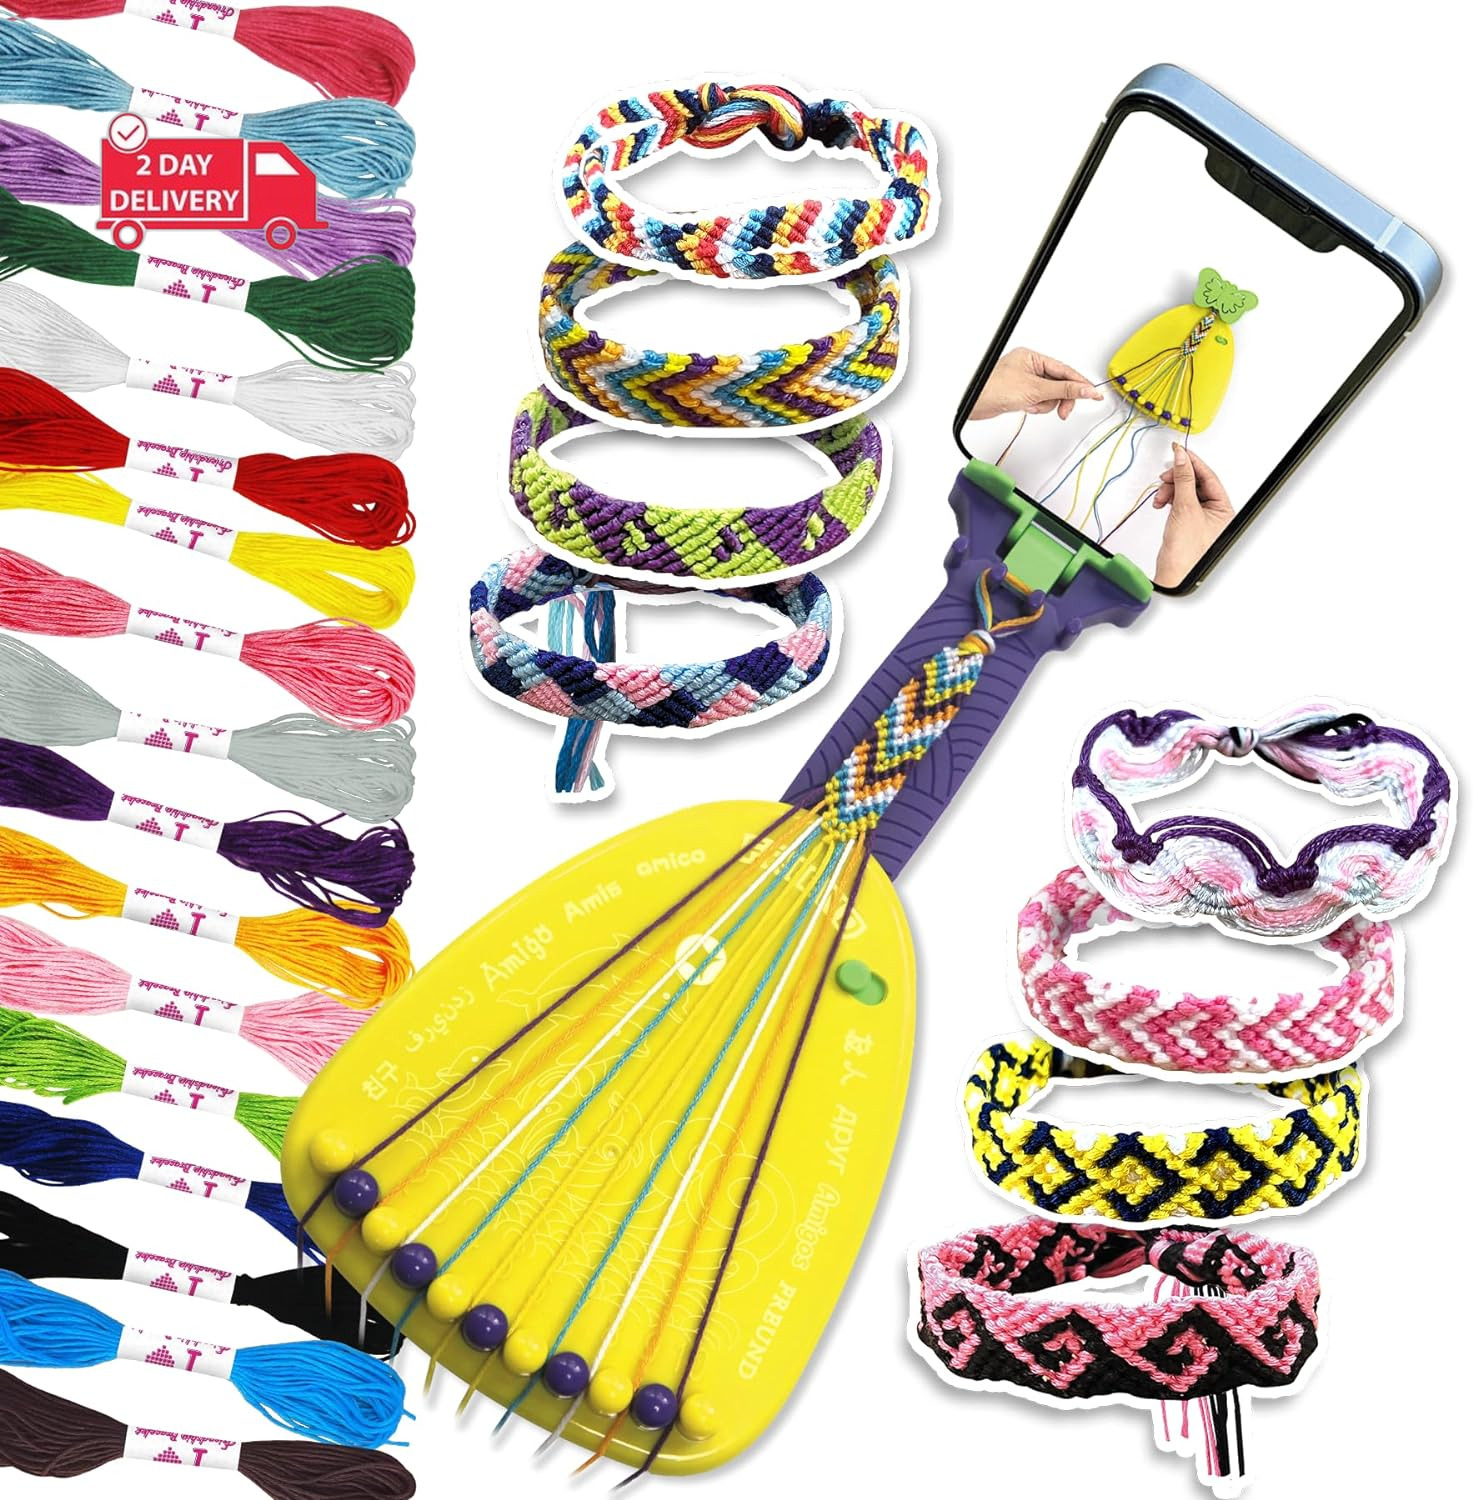 Friendship Bracelet String Maker Kit, Arts and Crafts for Girls Ages 8-12 Year O